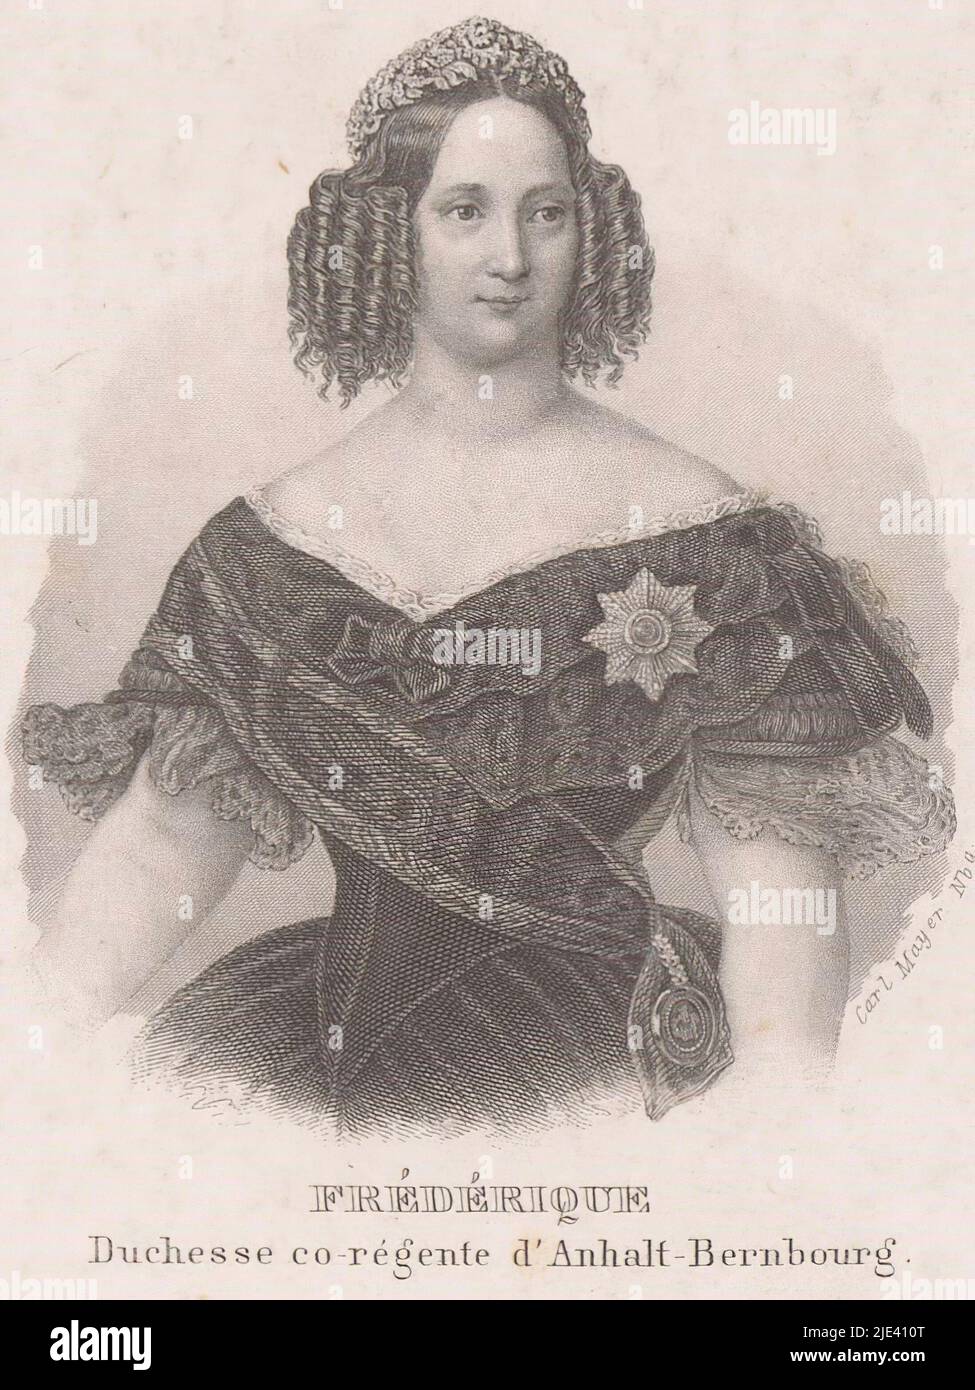 Portrait of Frederica of Schleswig-Holstein-Sonderburg-Glücksburg, Duchess of Anhalt-Bernburg, Carl Mayer, 1811 - 1868, print maker: Carl Mayer, (mentioned on object), Neurenberg, 1811 - 1868, paper, steel engraving, h 102 mm - w 72 mm Stock Photo